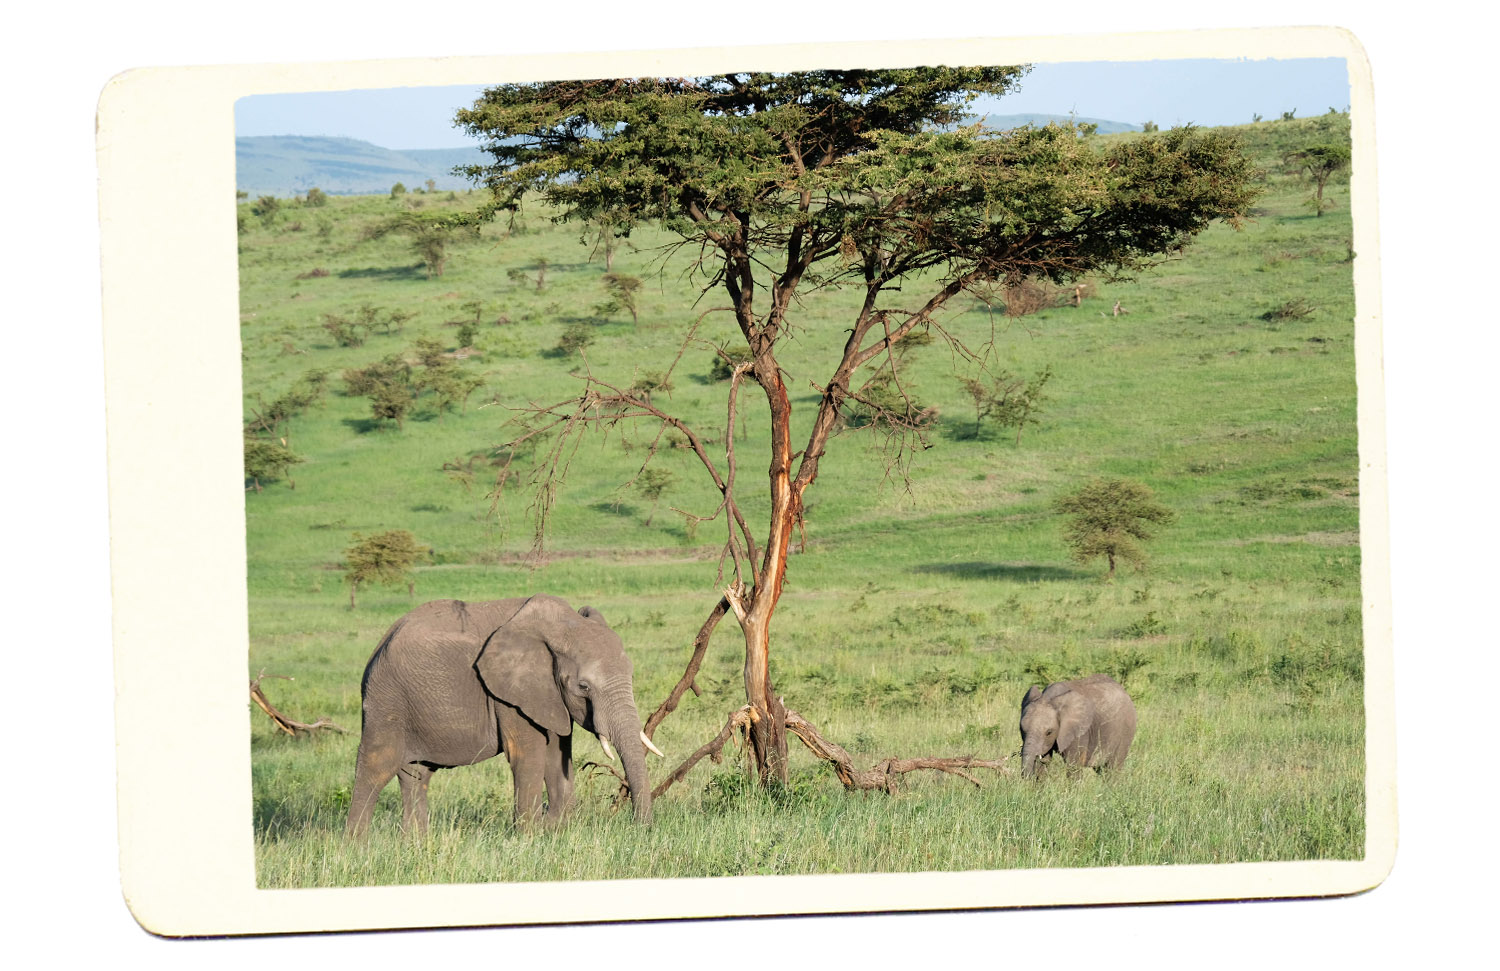 elephants in africa safari